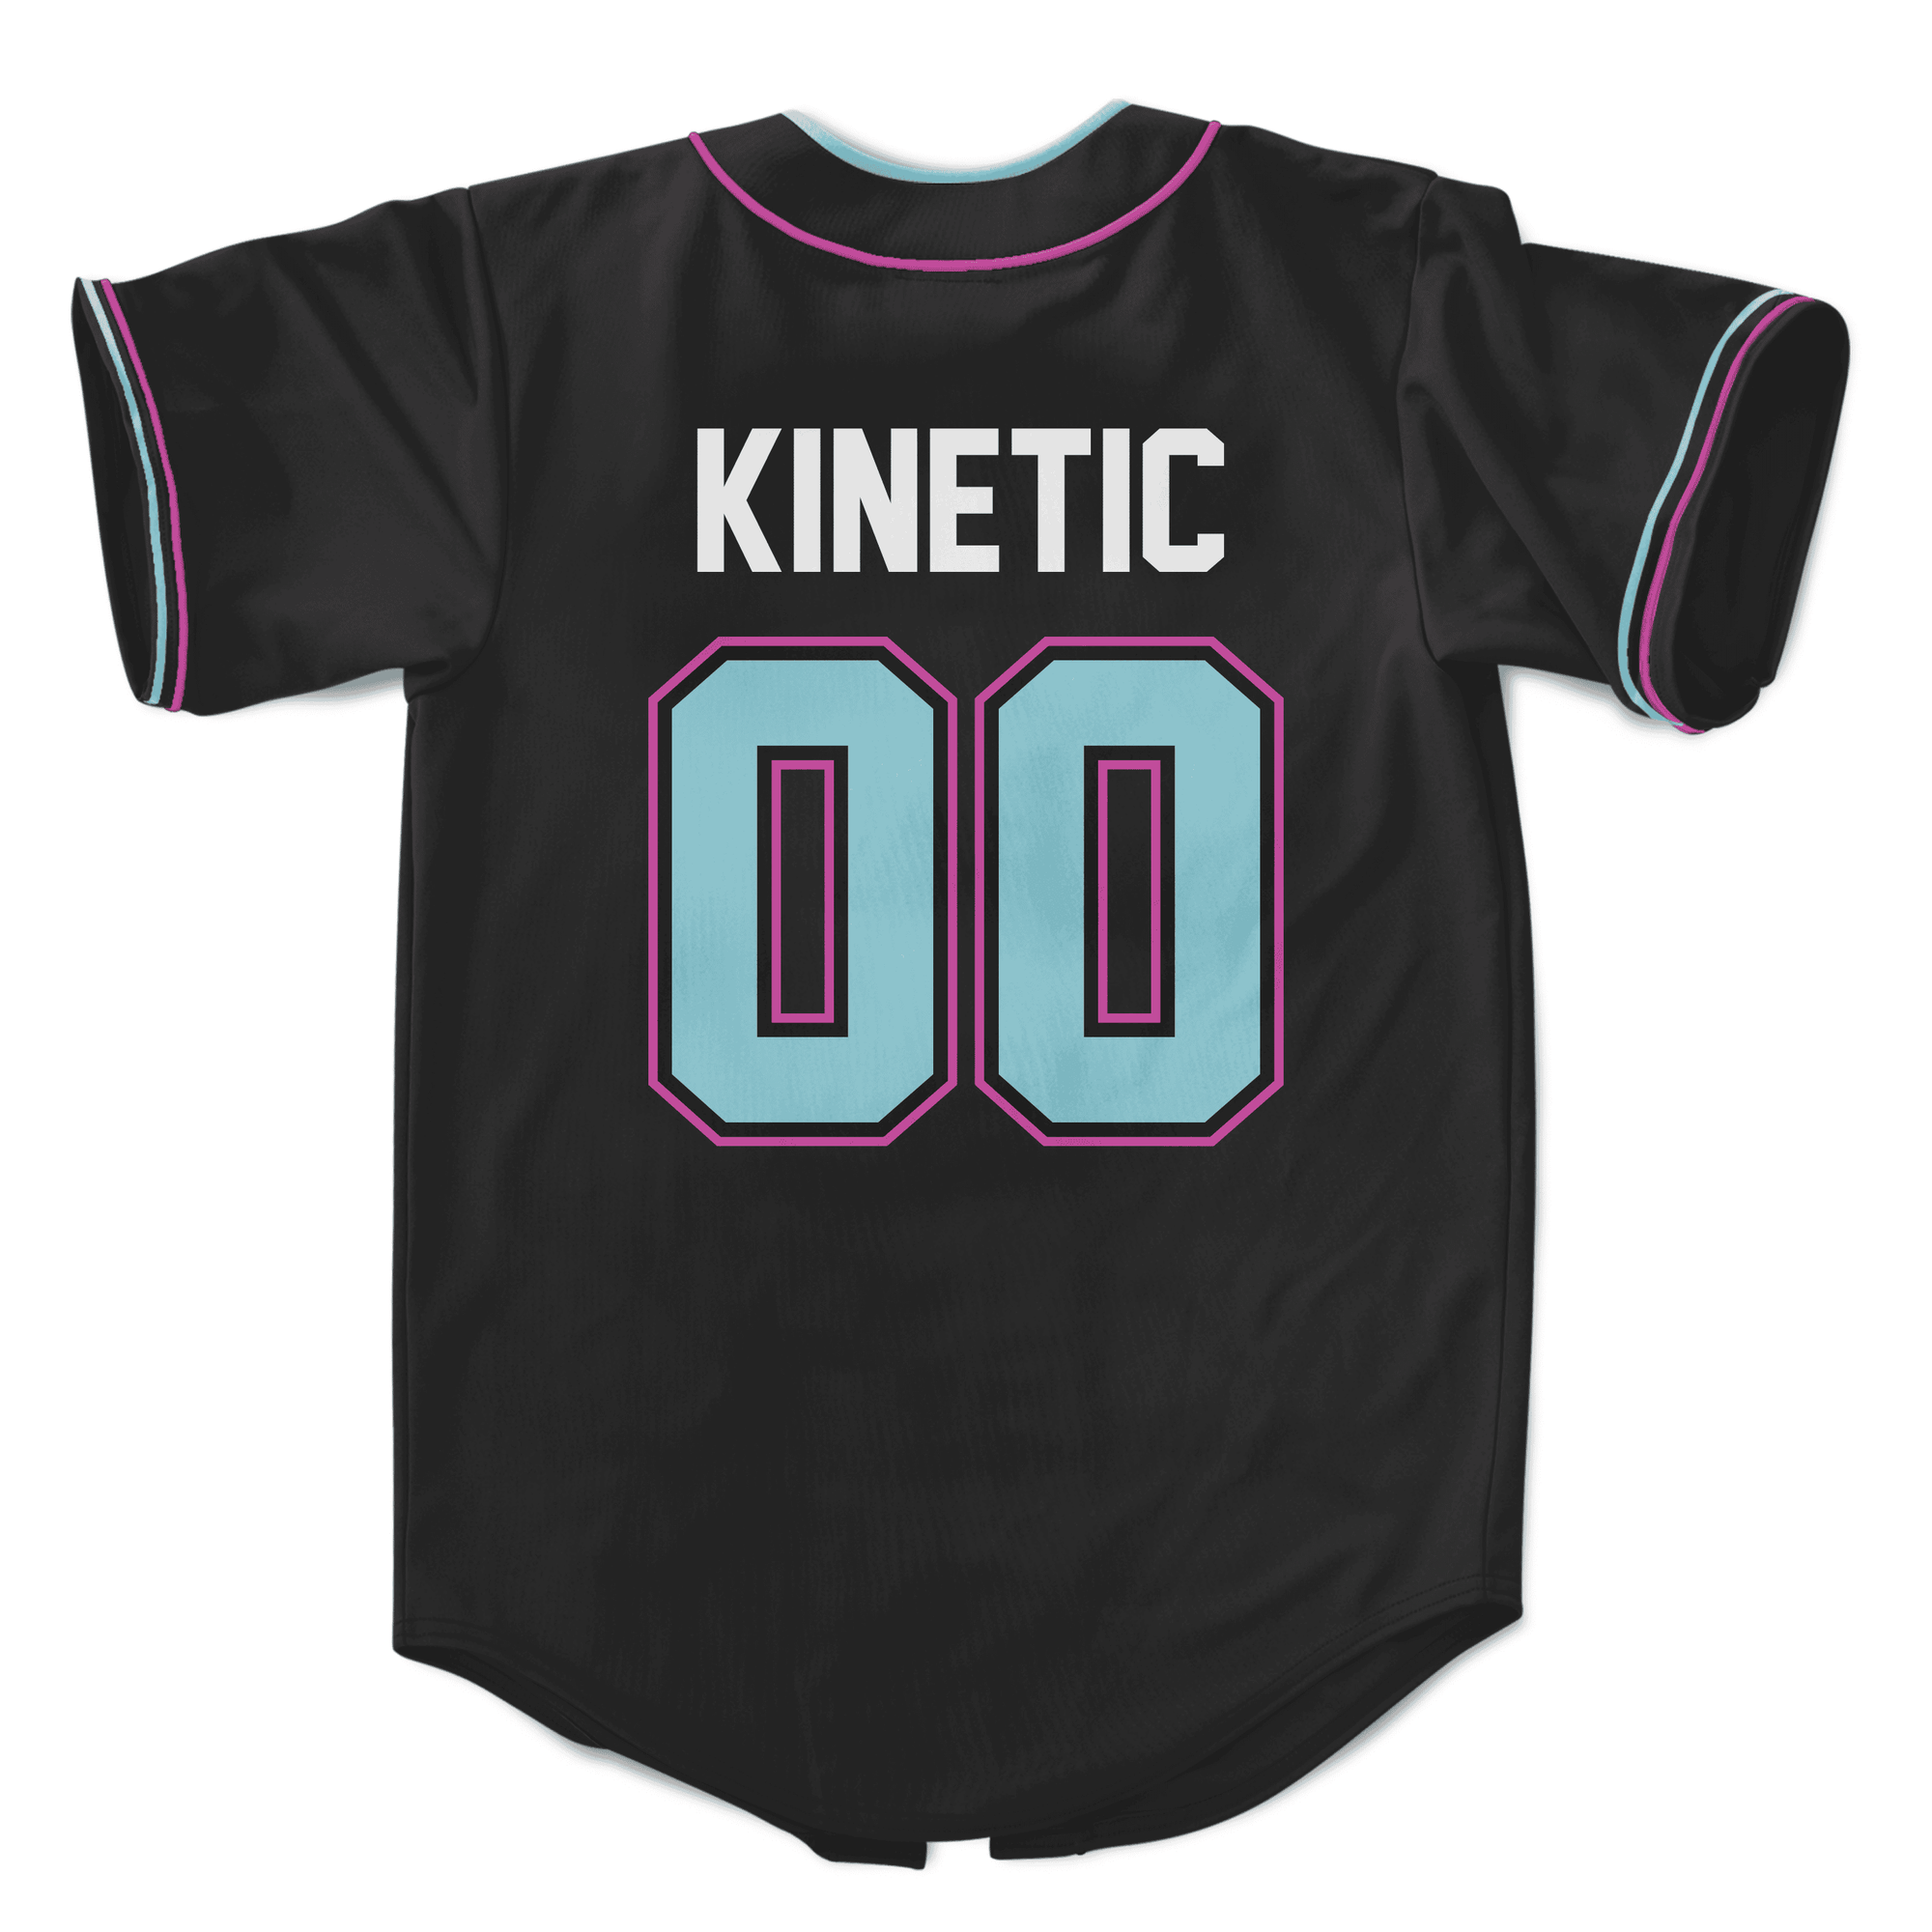 Phi Kappa Sigma - Neo Nightlife Baseball Jersey